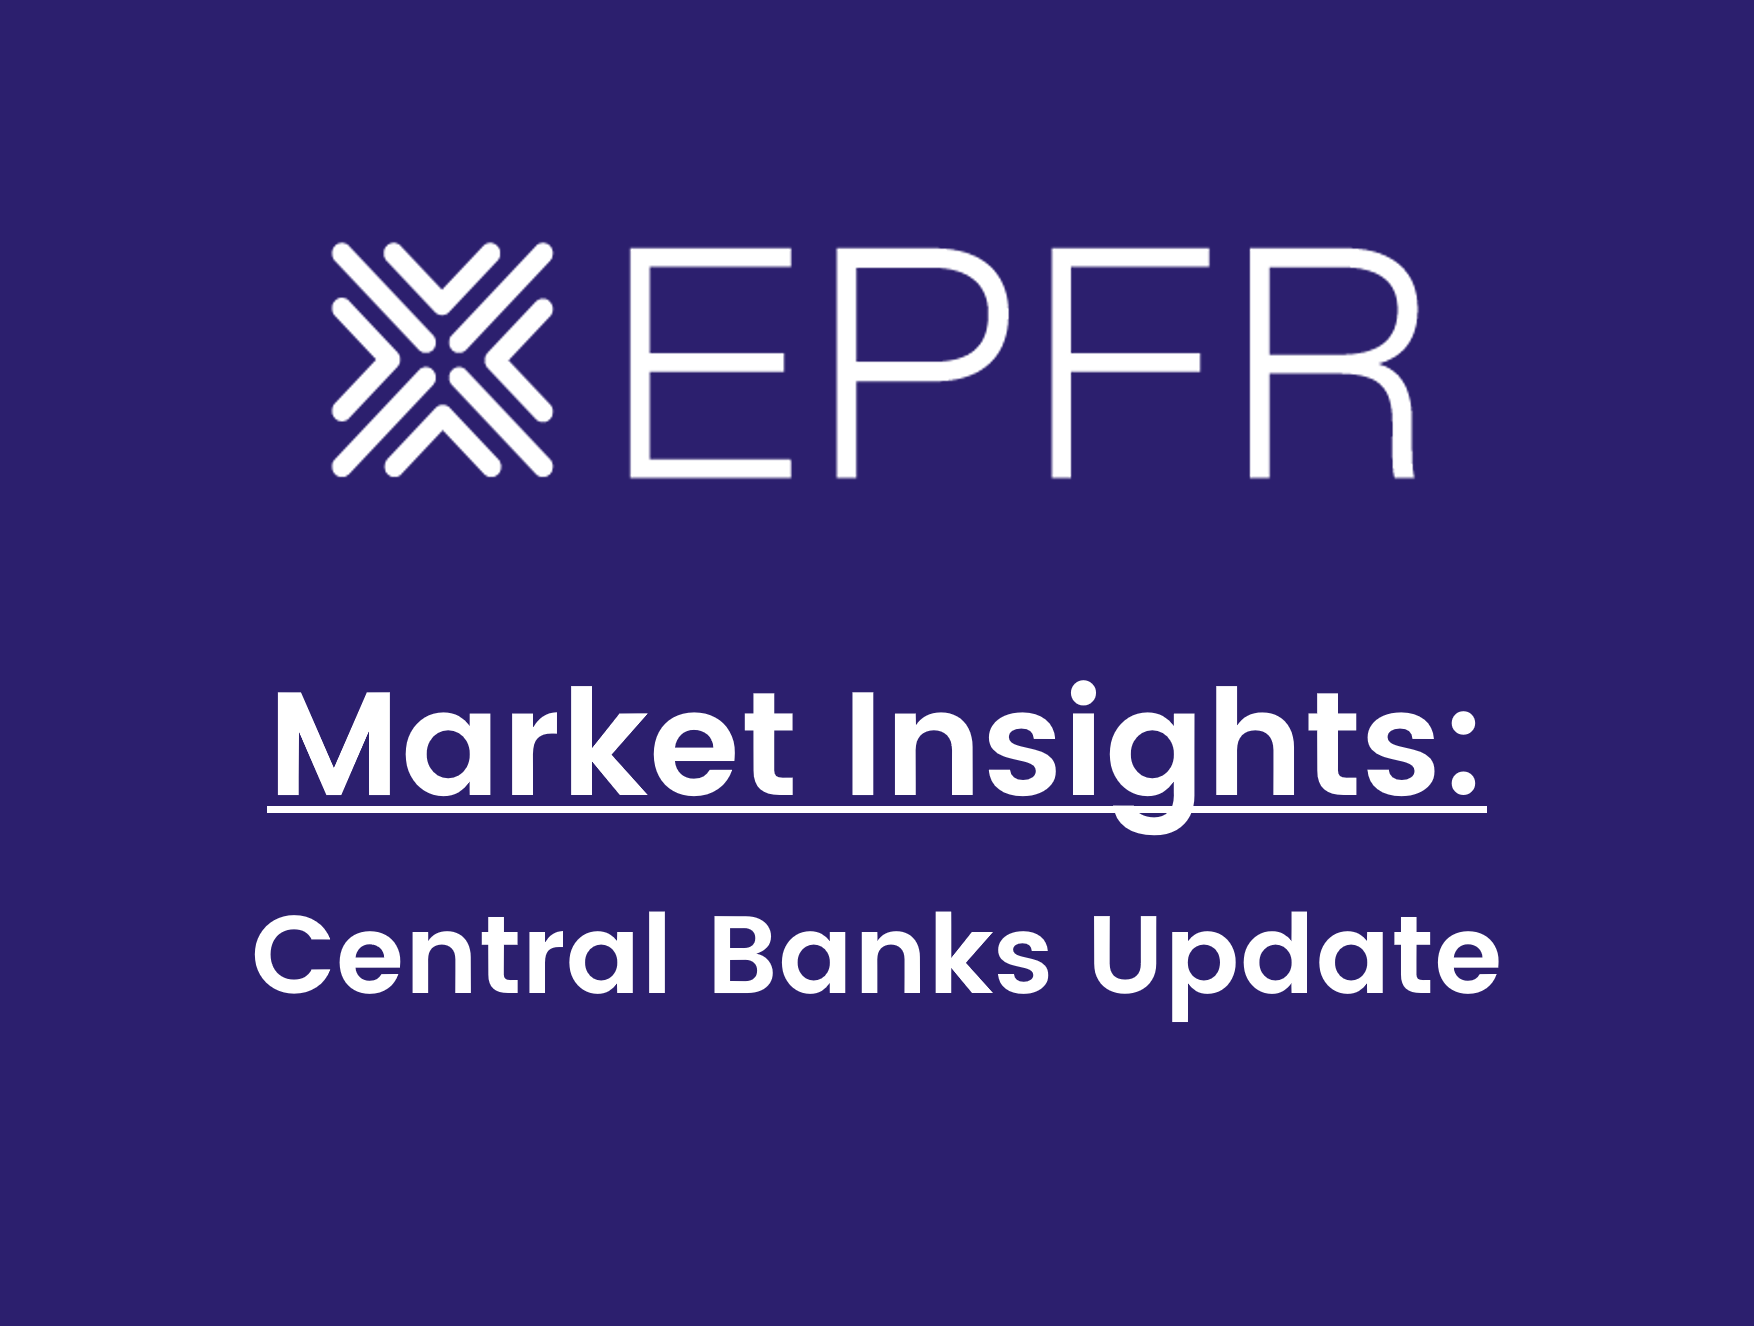 "EPFR Market Insights: Central Banks Update"